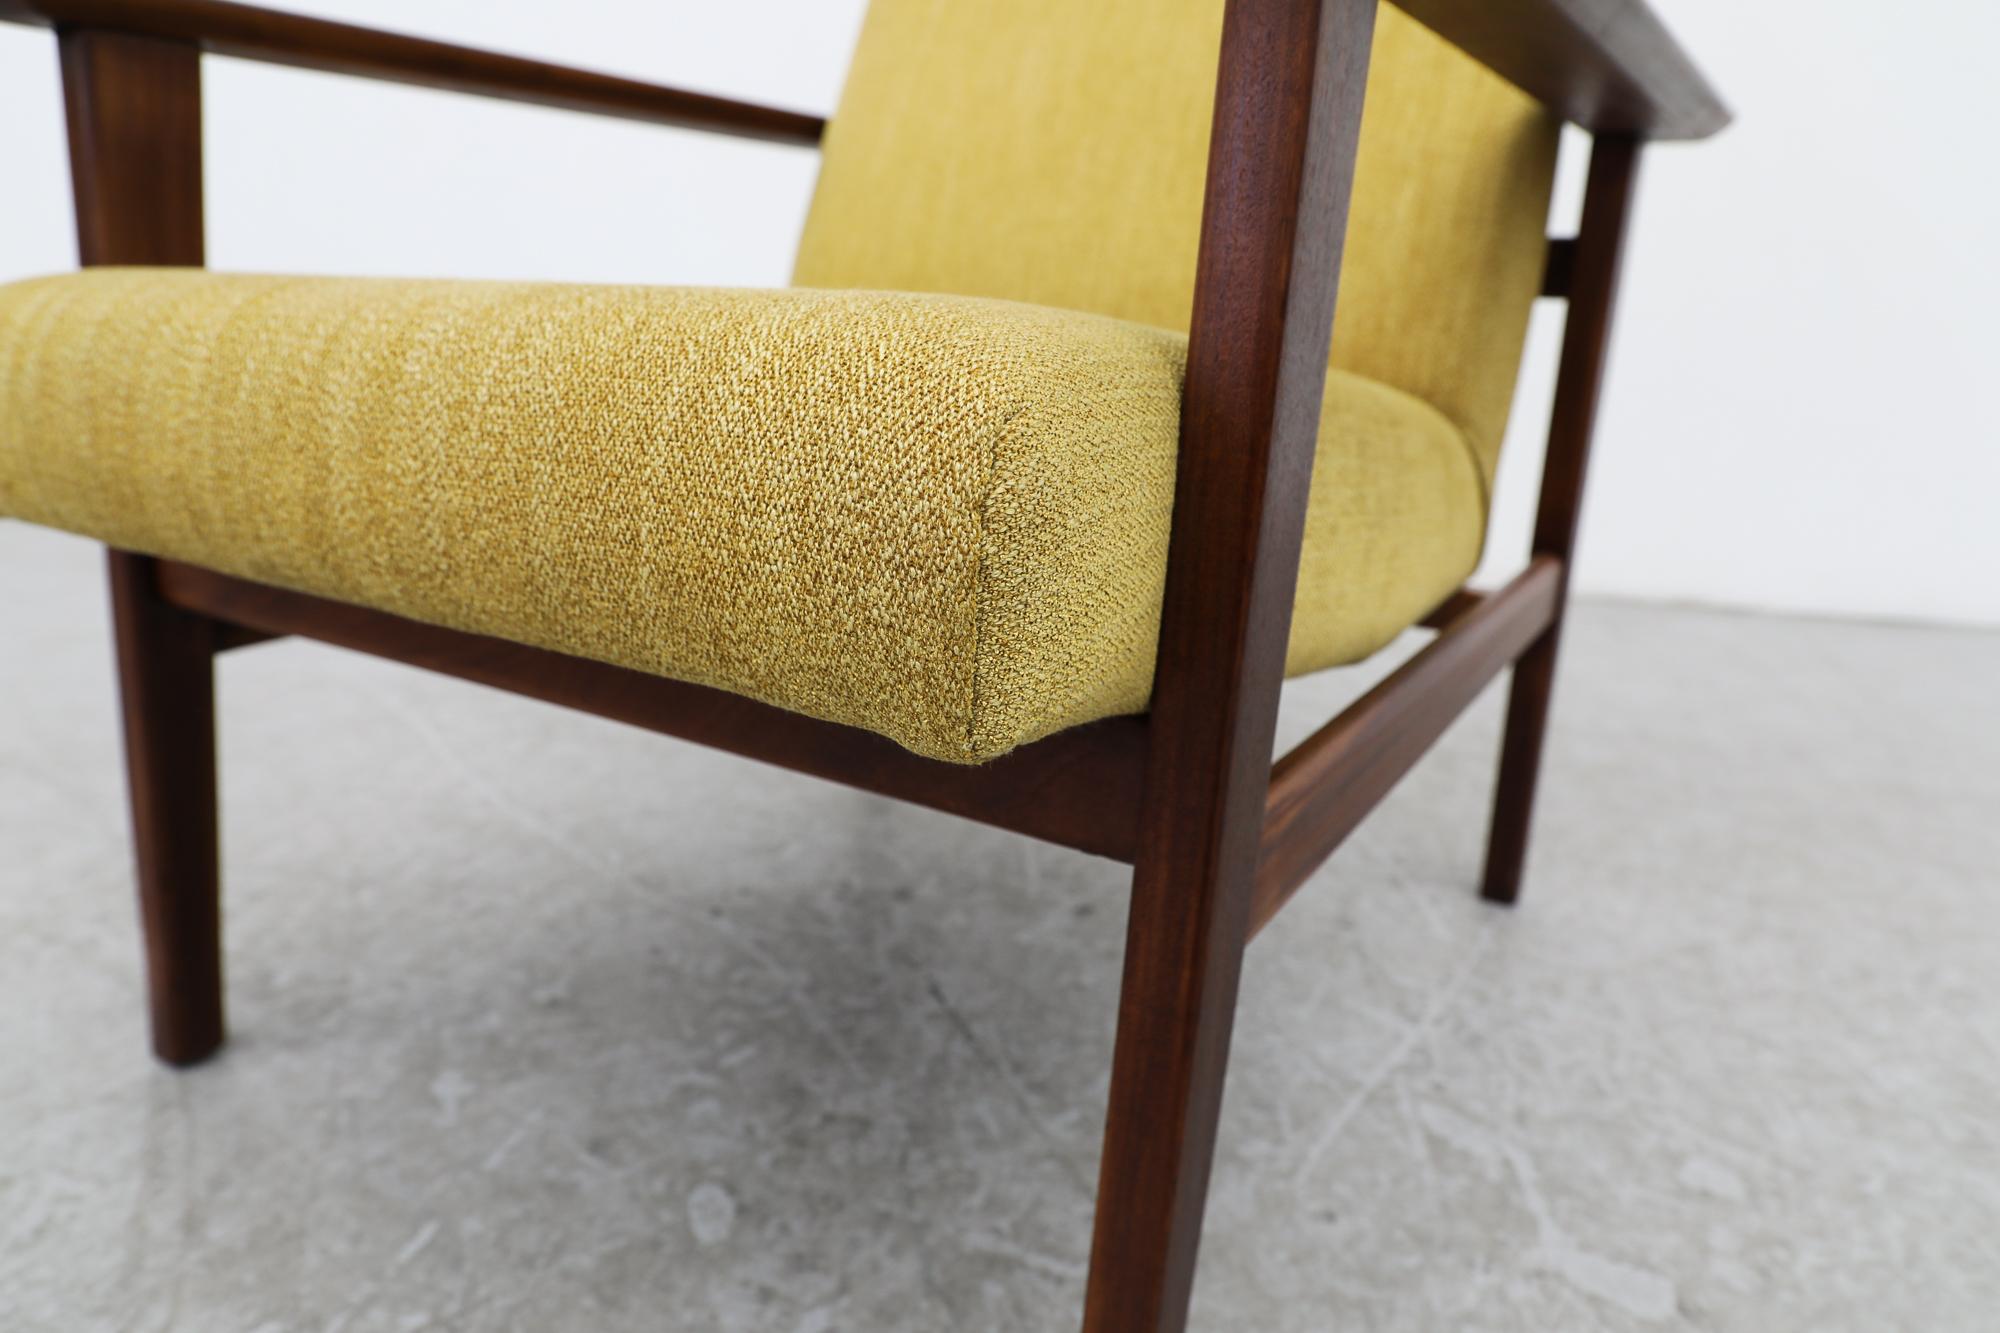 Handsome Hans Wegner Inspired Mid-Century Teak Lounge Chair in Saffron Fabric For Sale 7